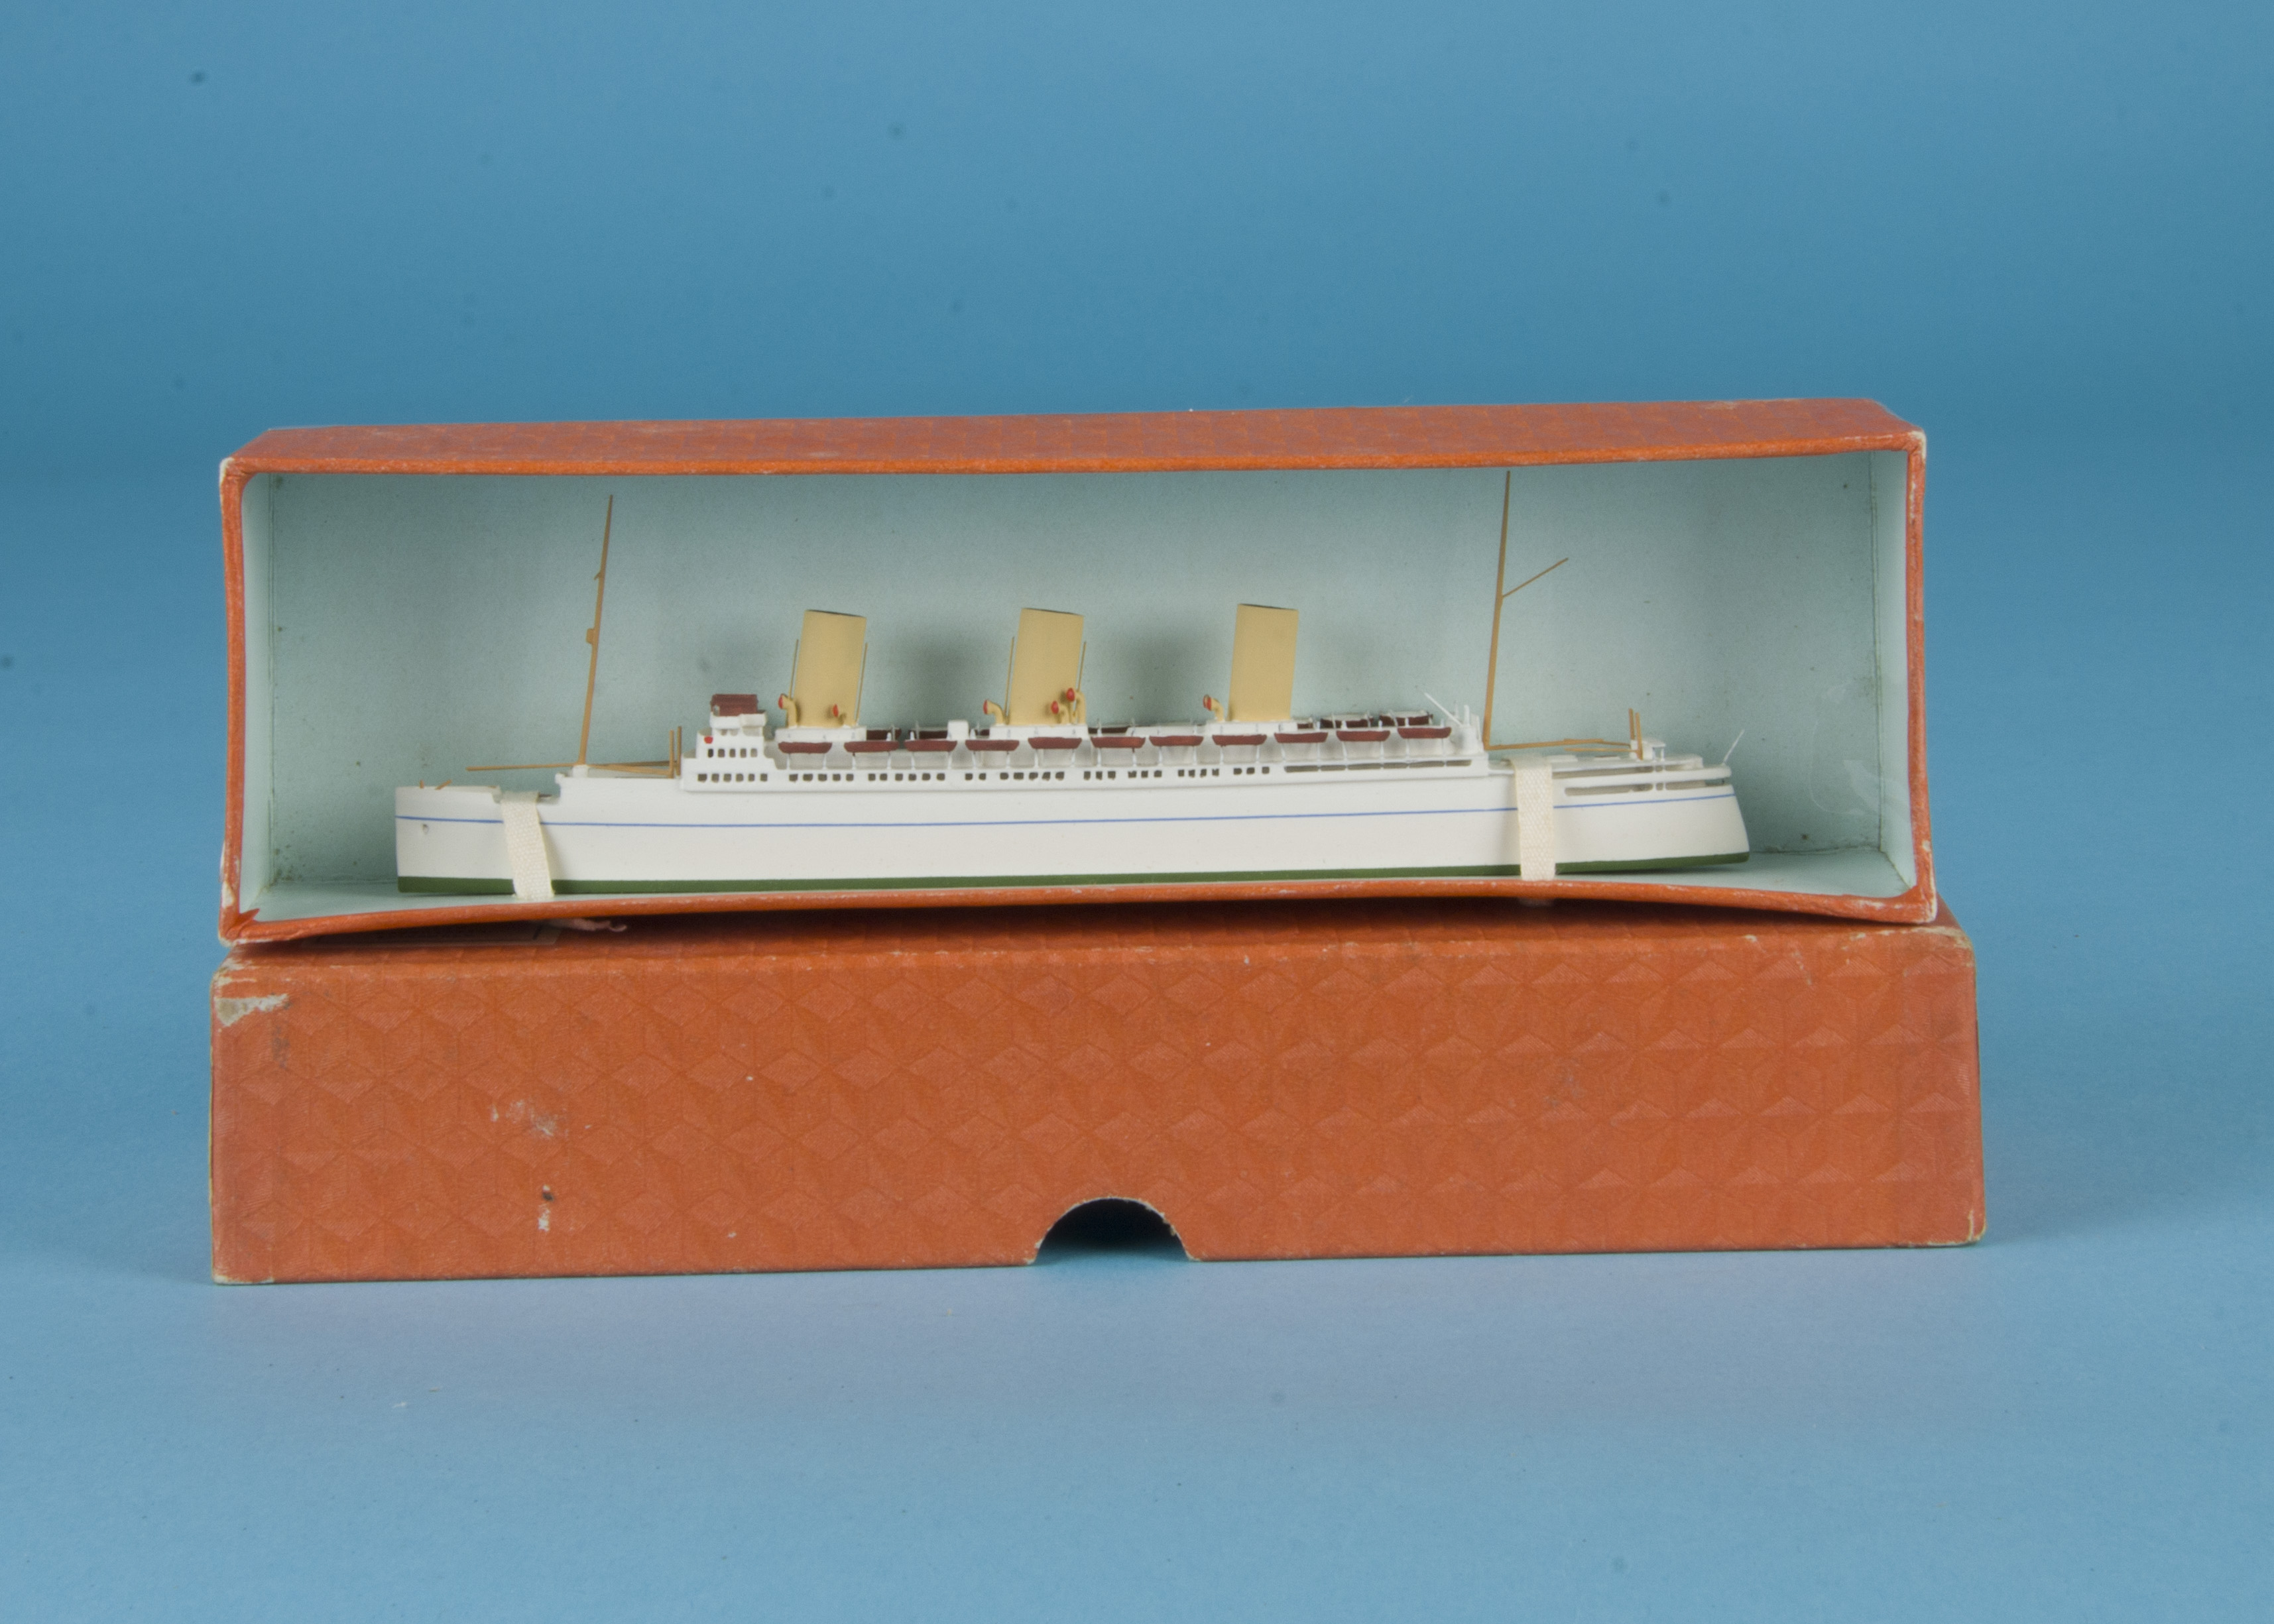 A Bassett-Lowke wooden 1:1200 Waterline Model of Canadian Pacific Line Ocean Liner RMS Empress of